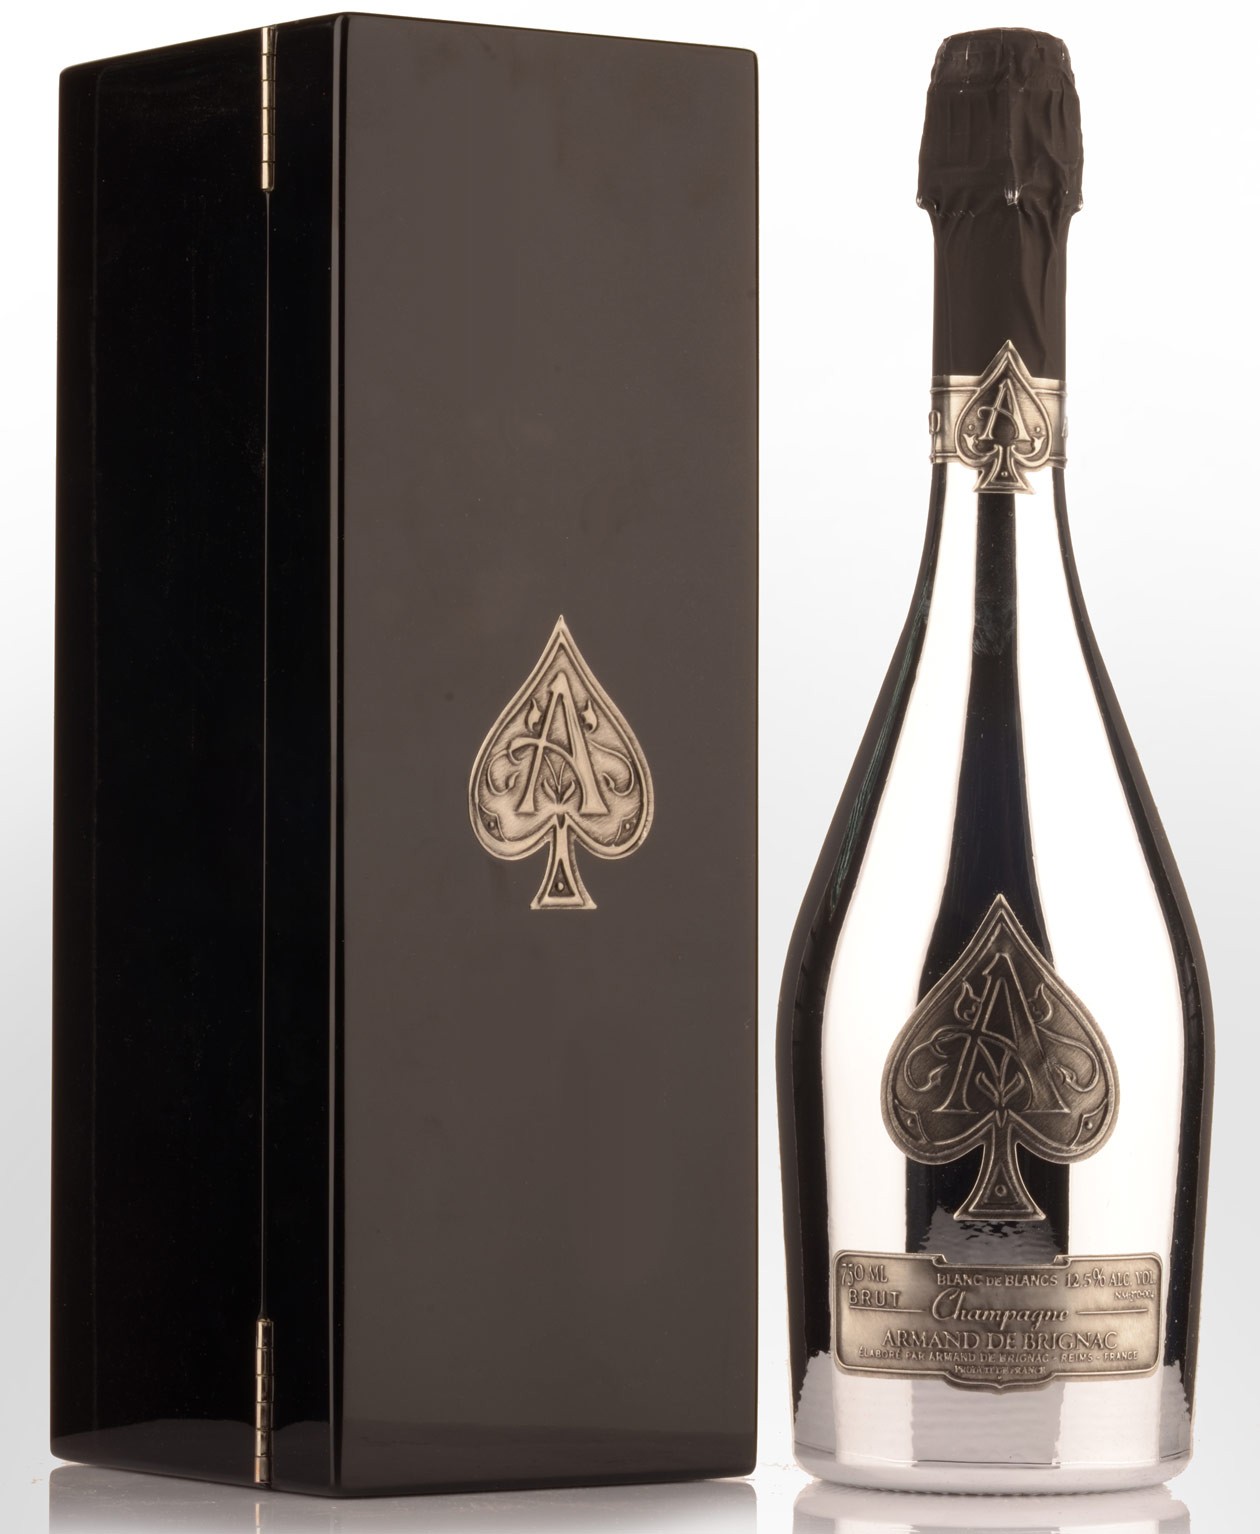 NV Armand De Brignac Blanc De Blancs Brut Champagne Ace of Spades - click image for full description